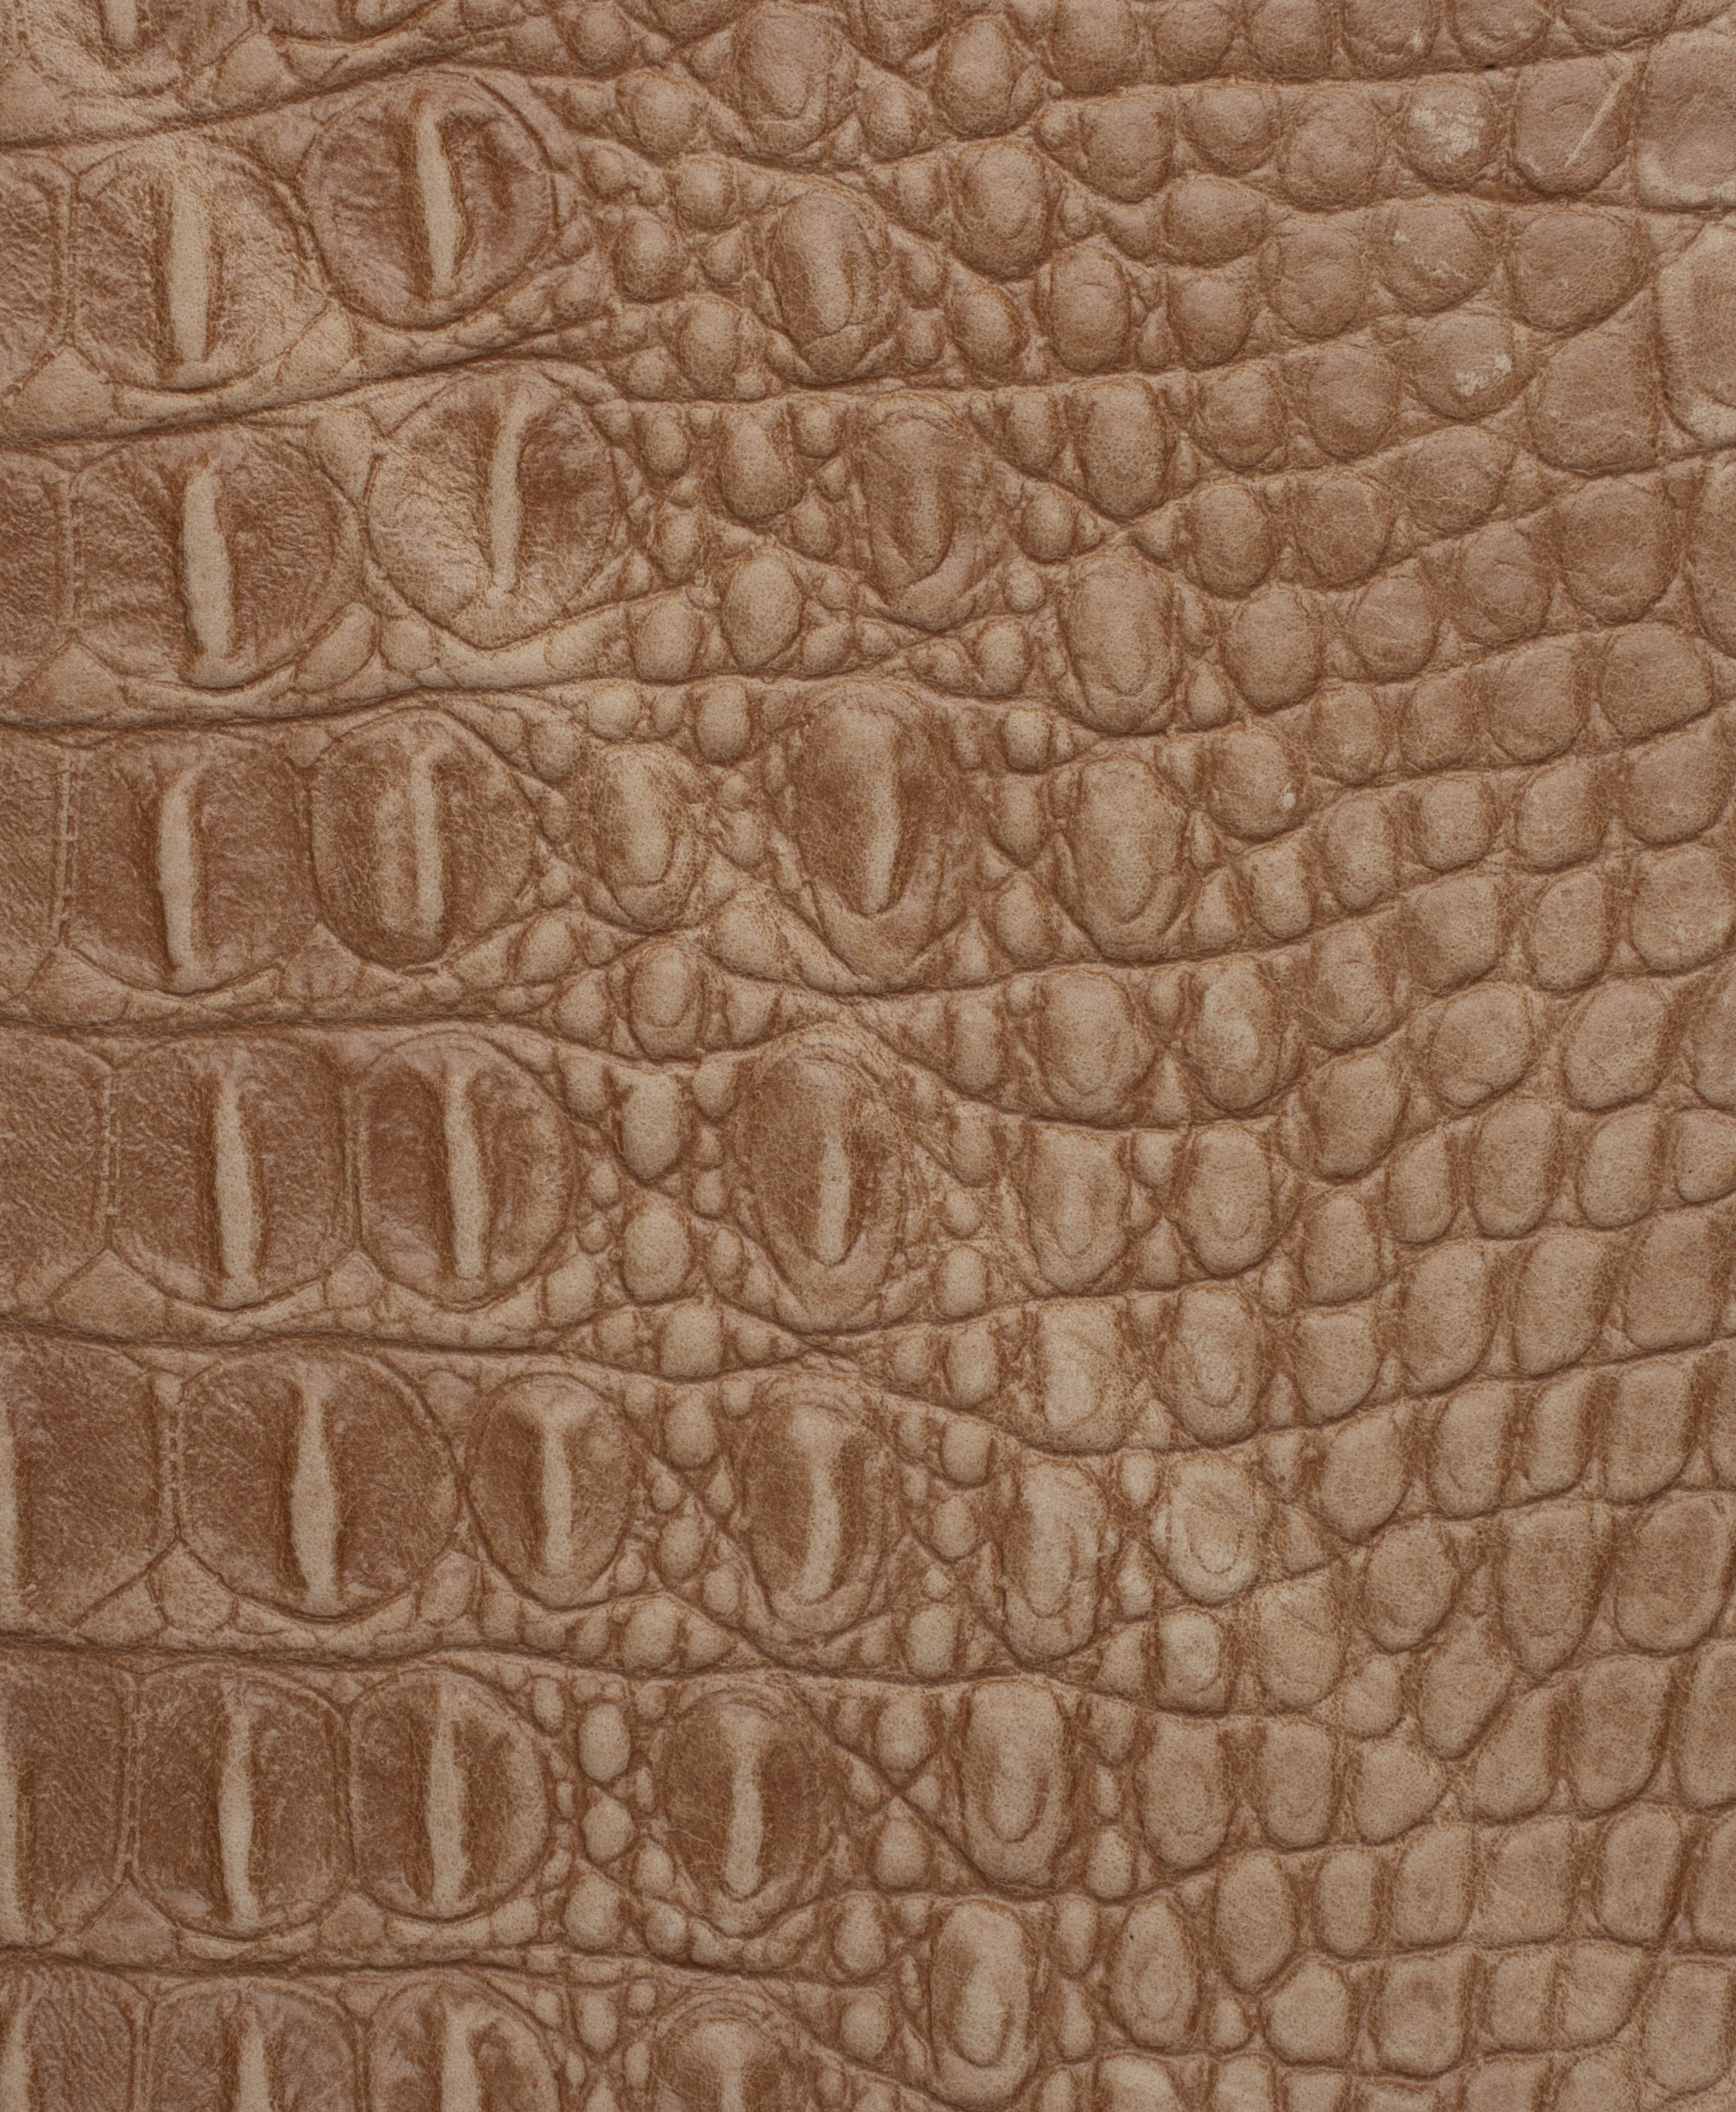 Ref Alligator pattern leather